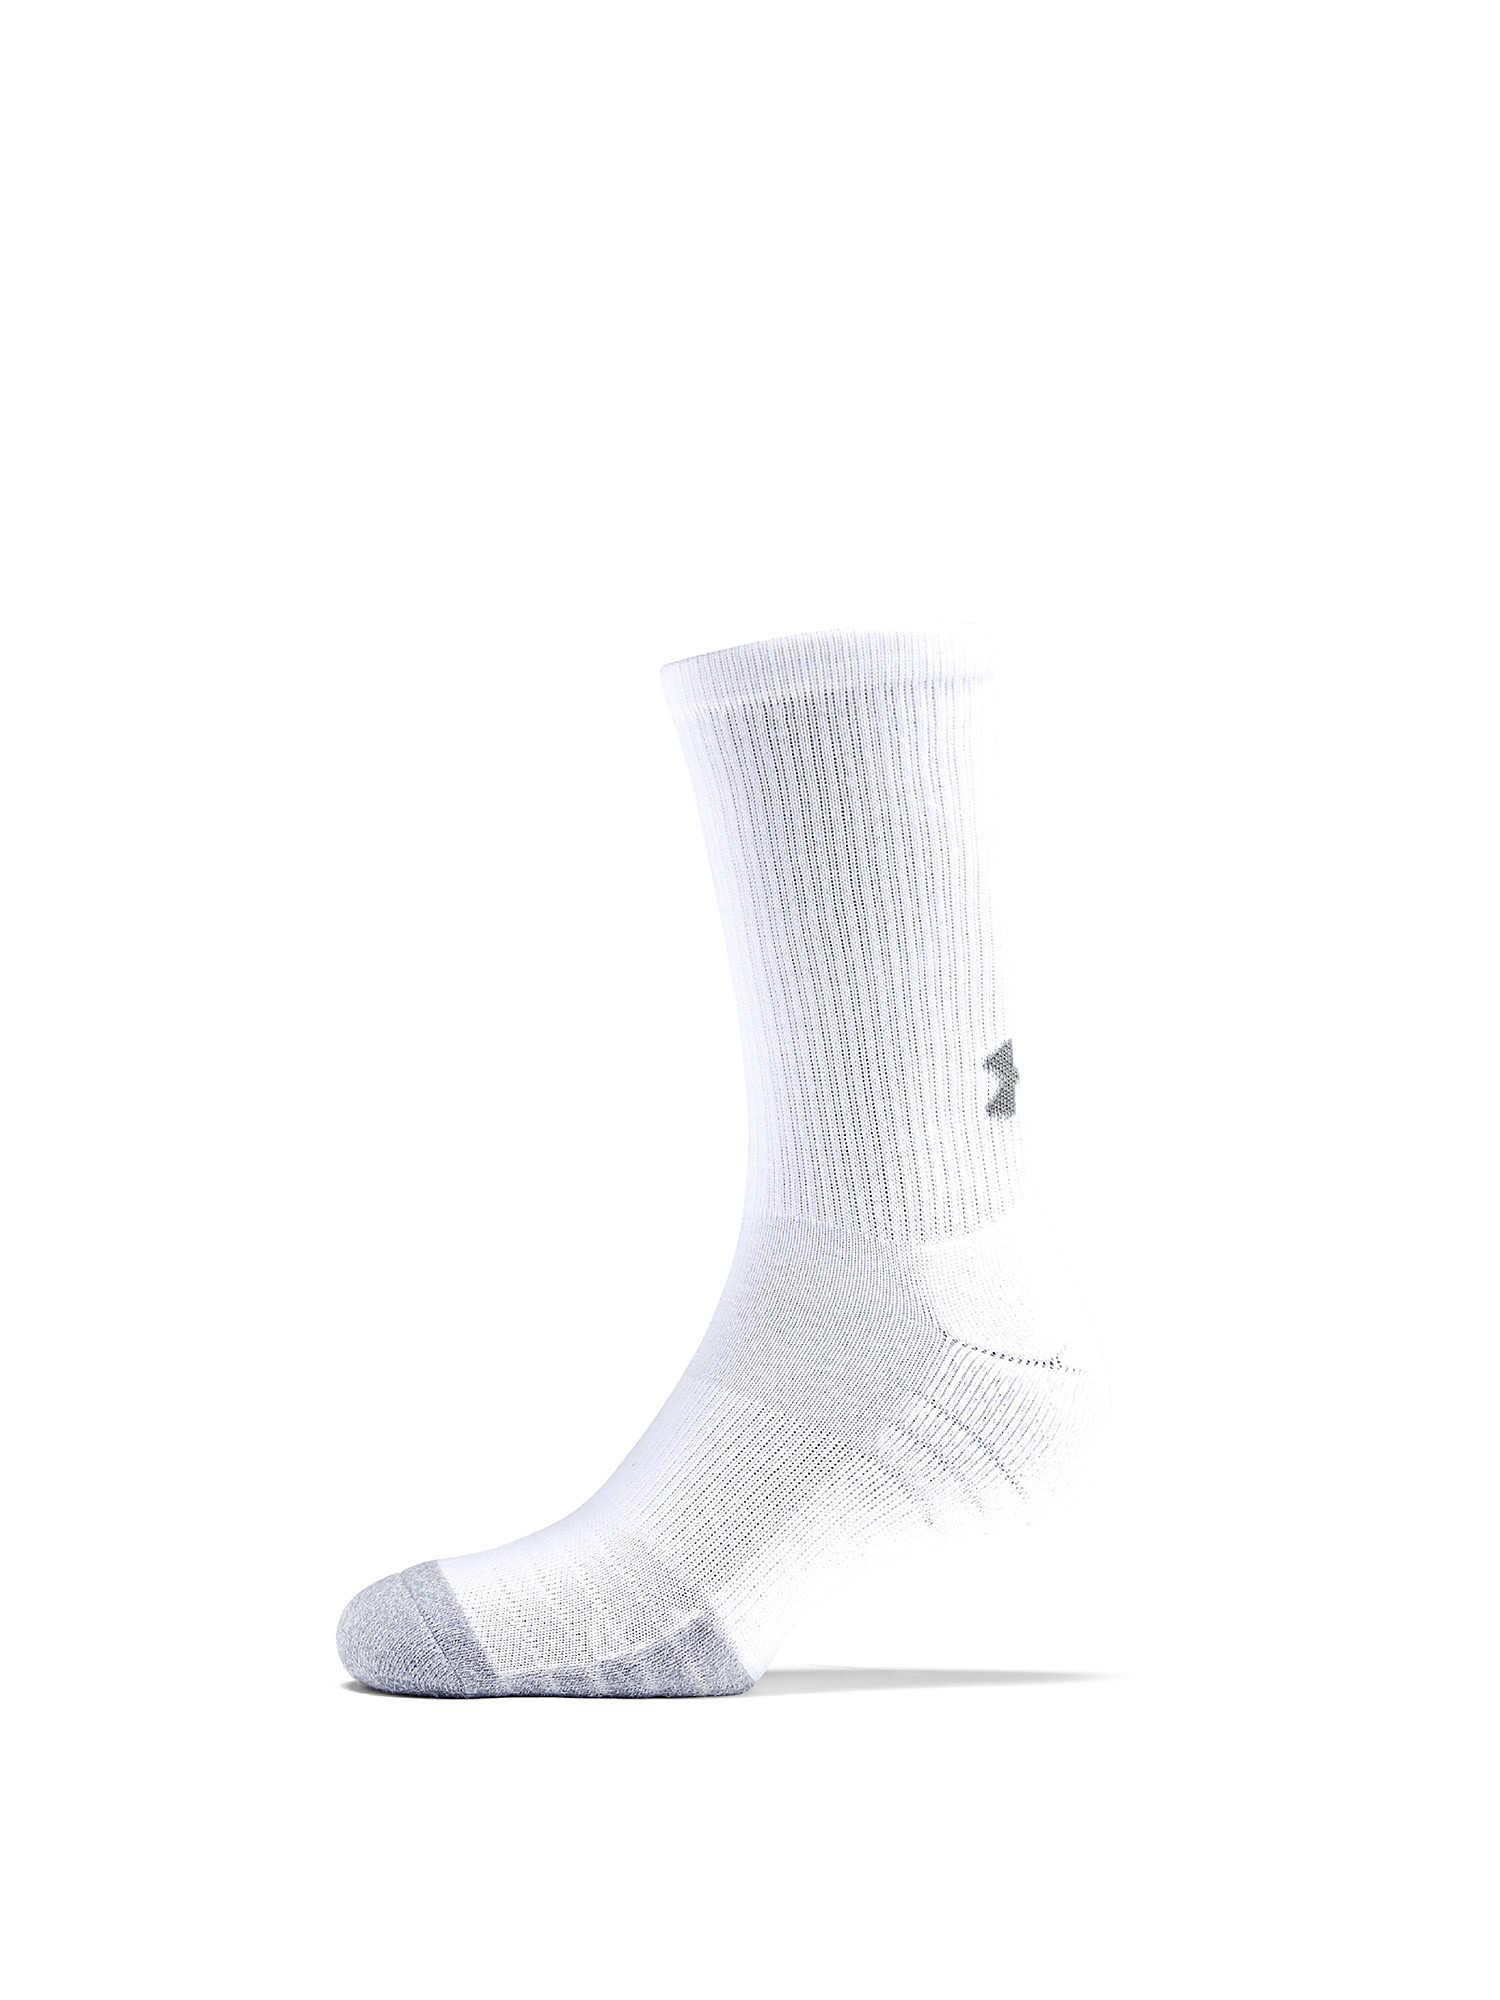 Under Armour - HeatGear® Crew socks, White, large image number 0